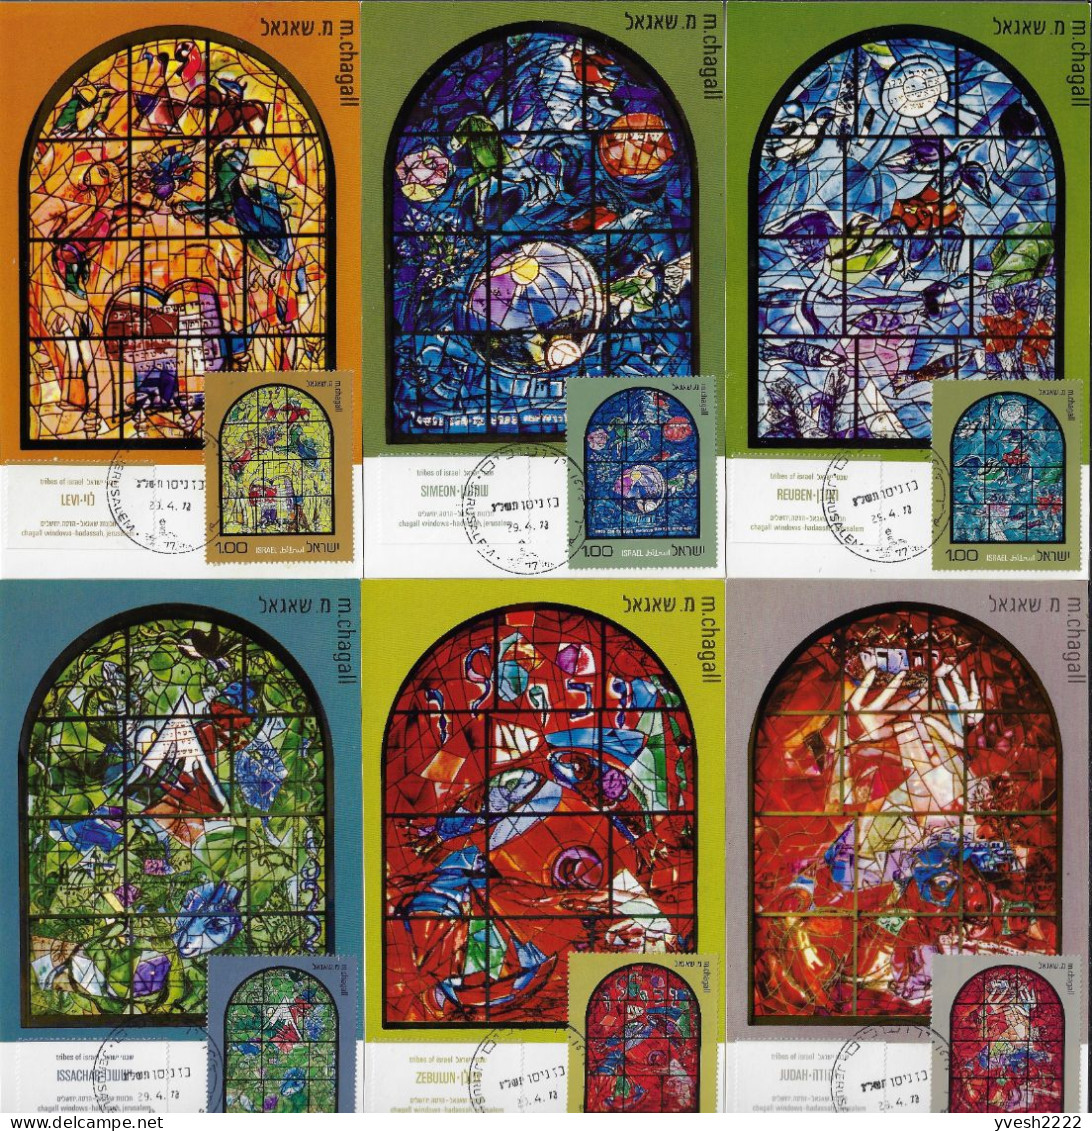 Israël 1973 Y&T 510 à 515. Série Sur CM. Vitraux De Marc Chagall I, Lévi, Siméon, Ruben, Issachar, Zabulon, Juda - Glas & Fenster